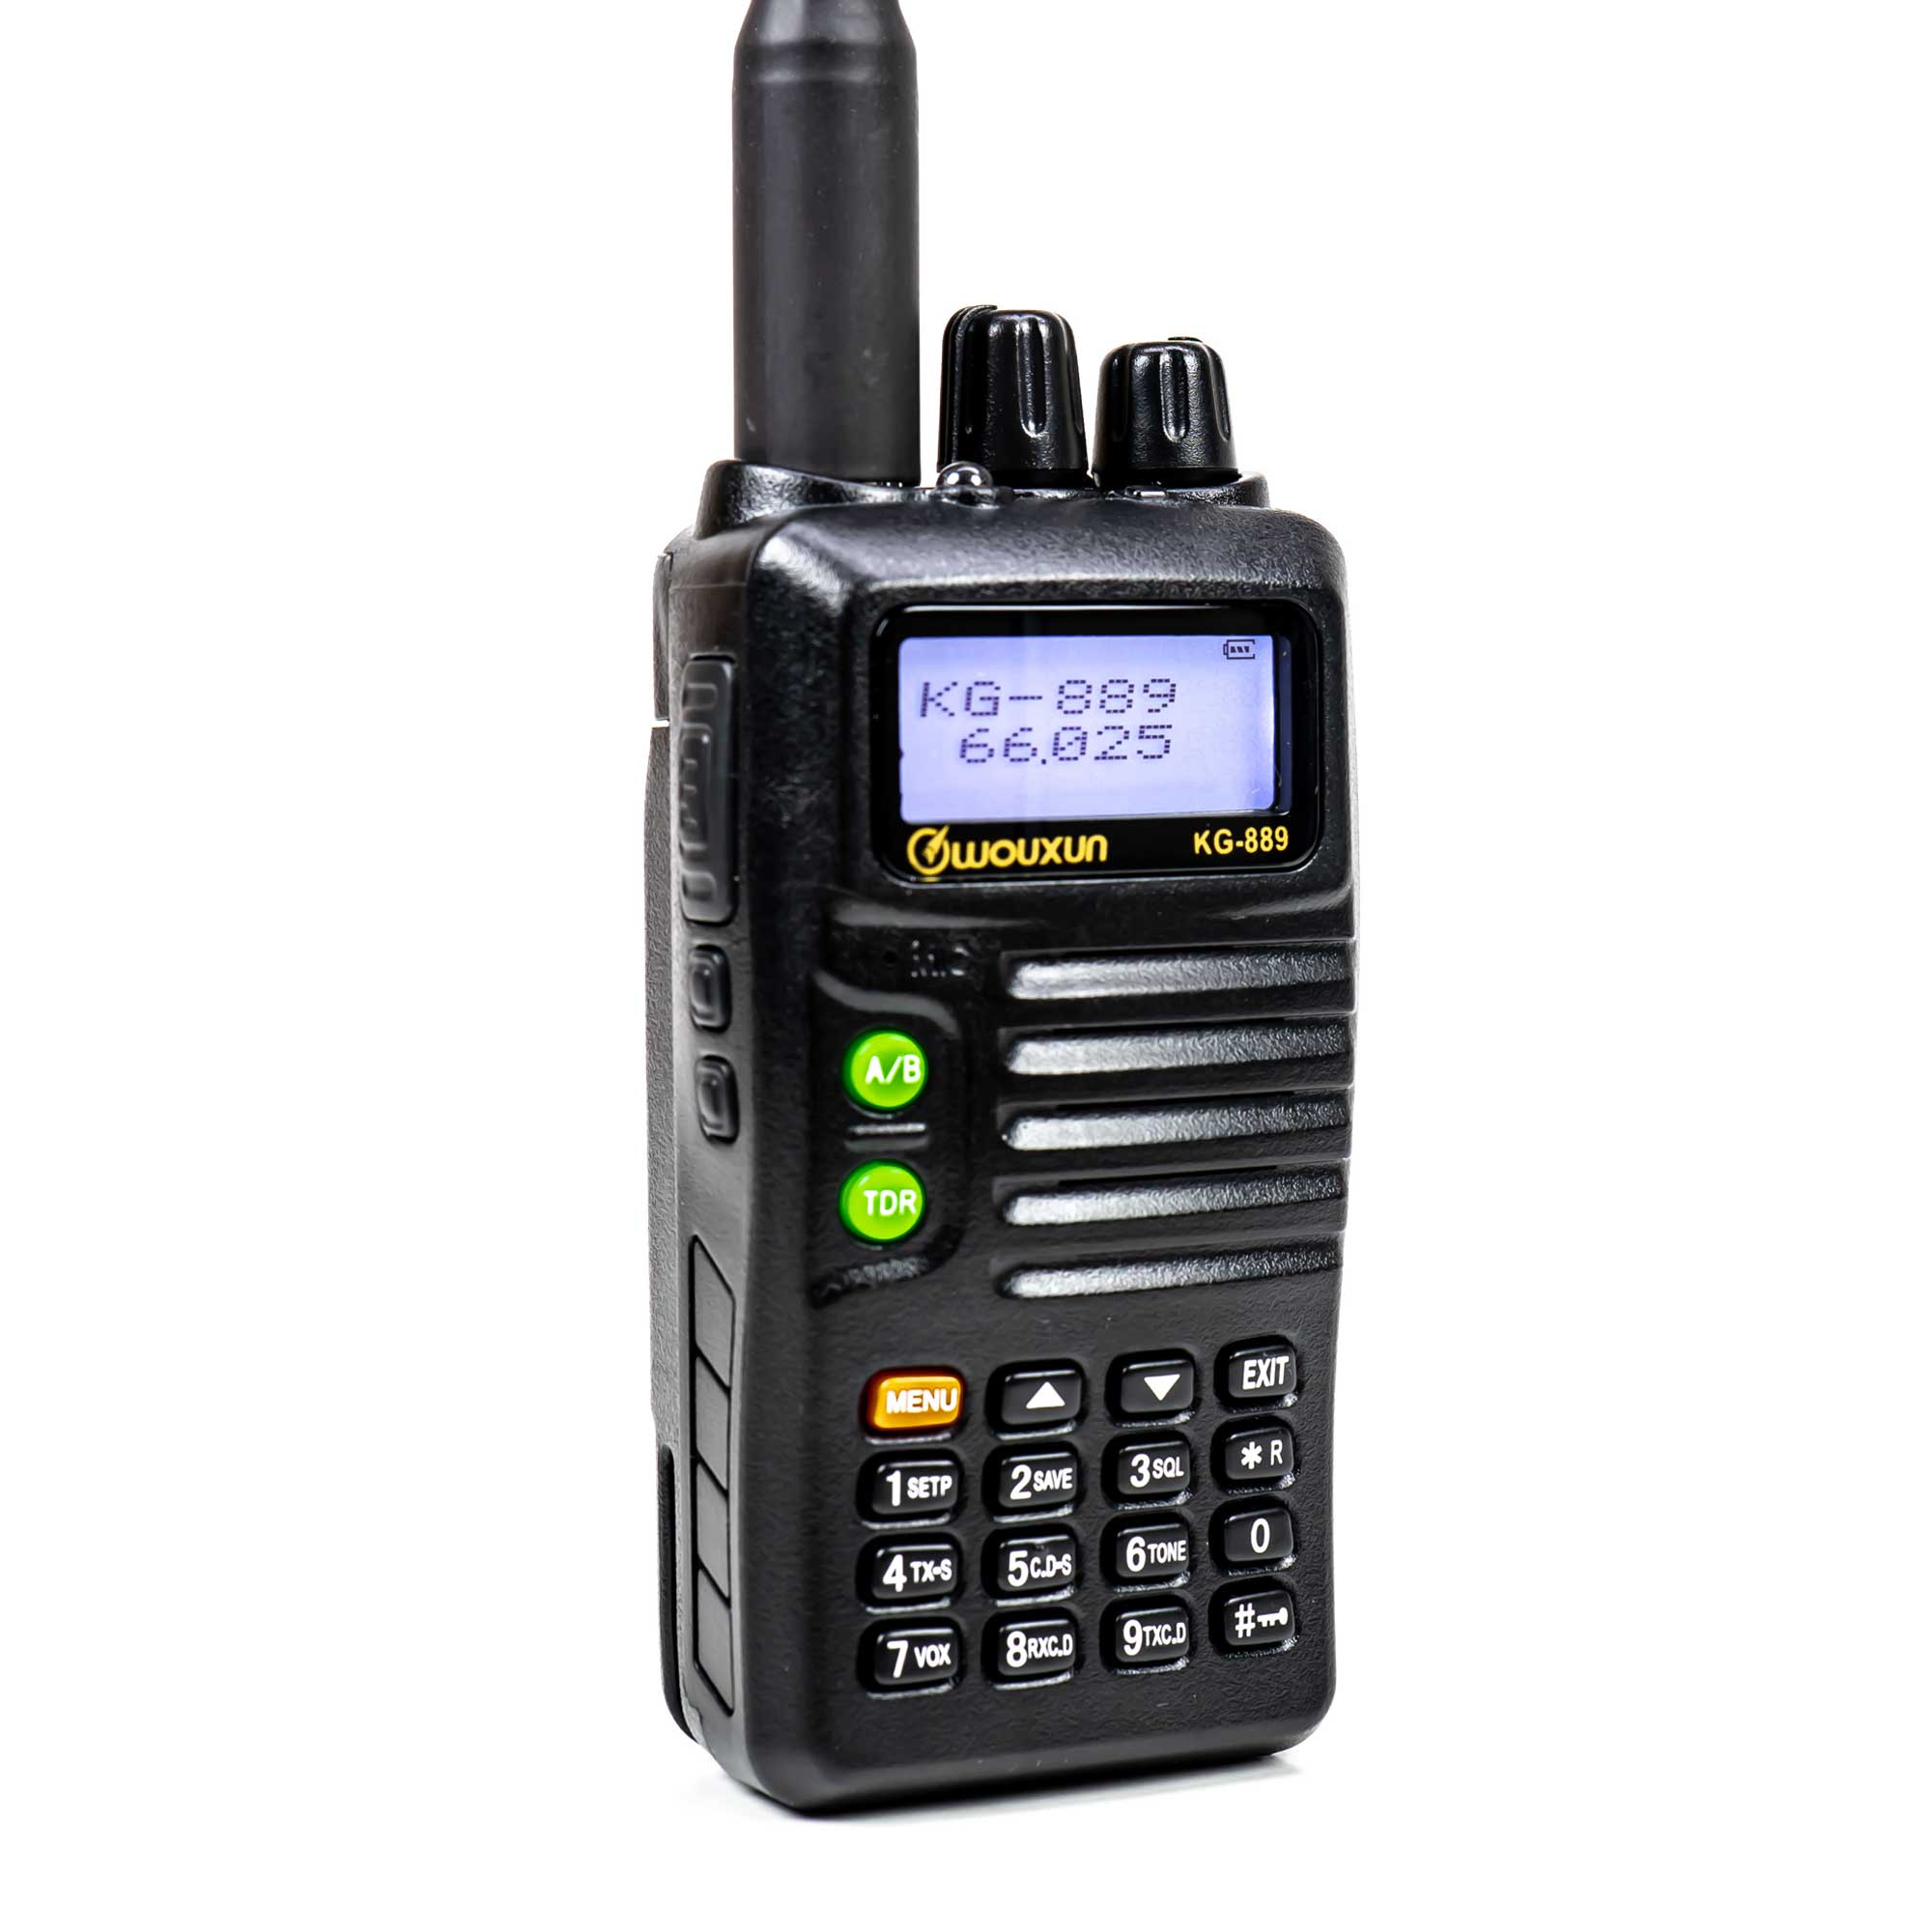 Statie radio portabila VHF PNI KG-889, 66-88 MHz image7